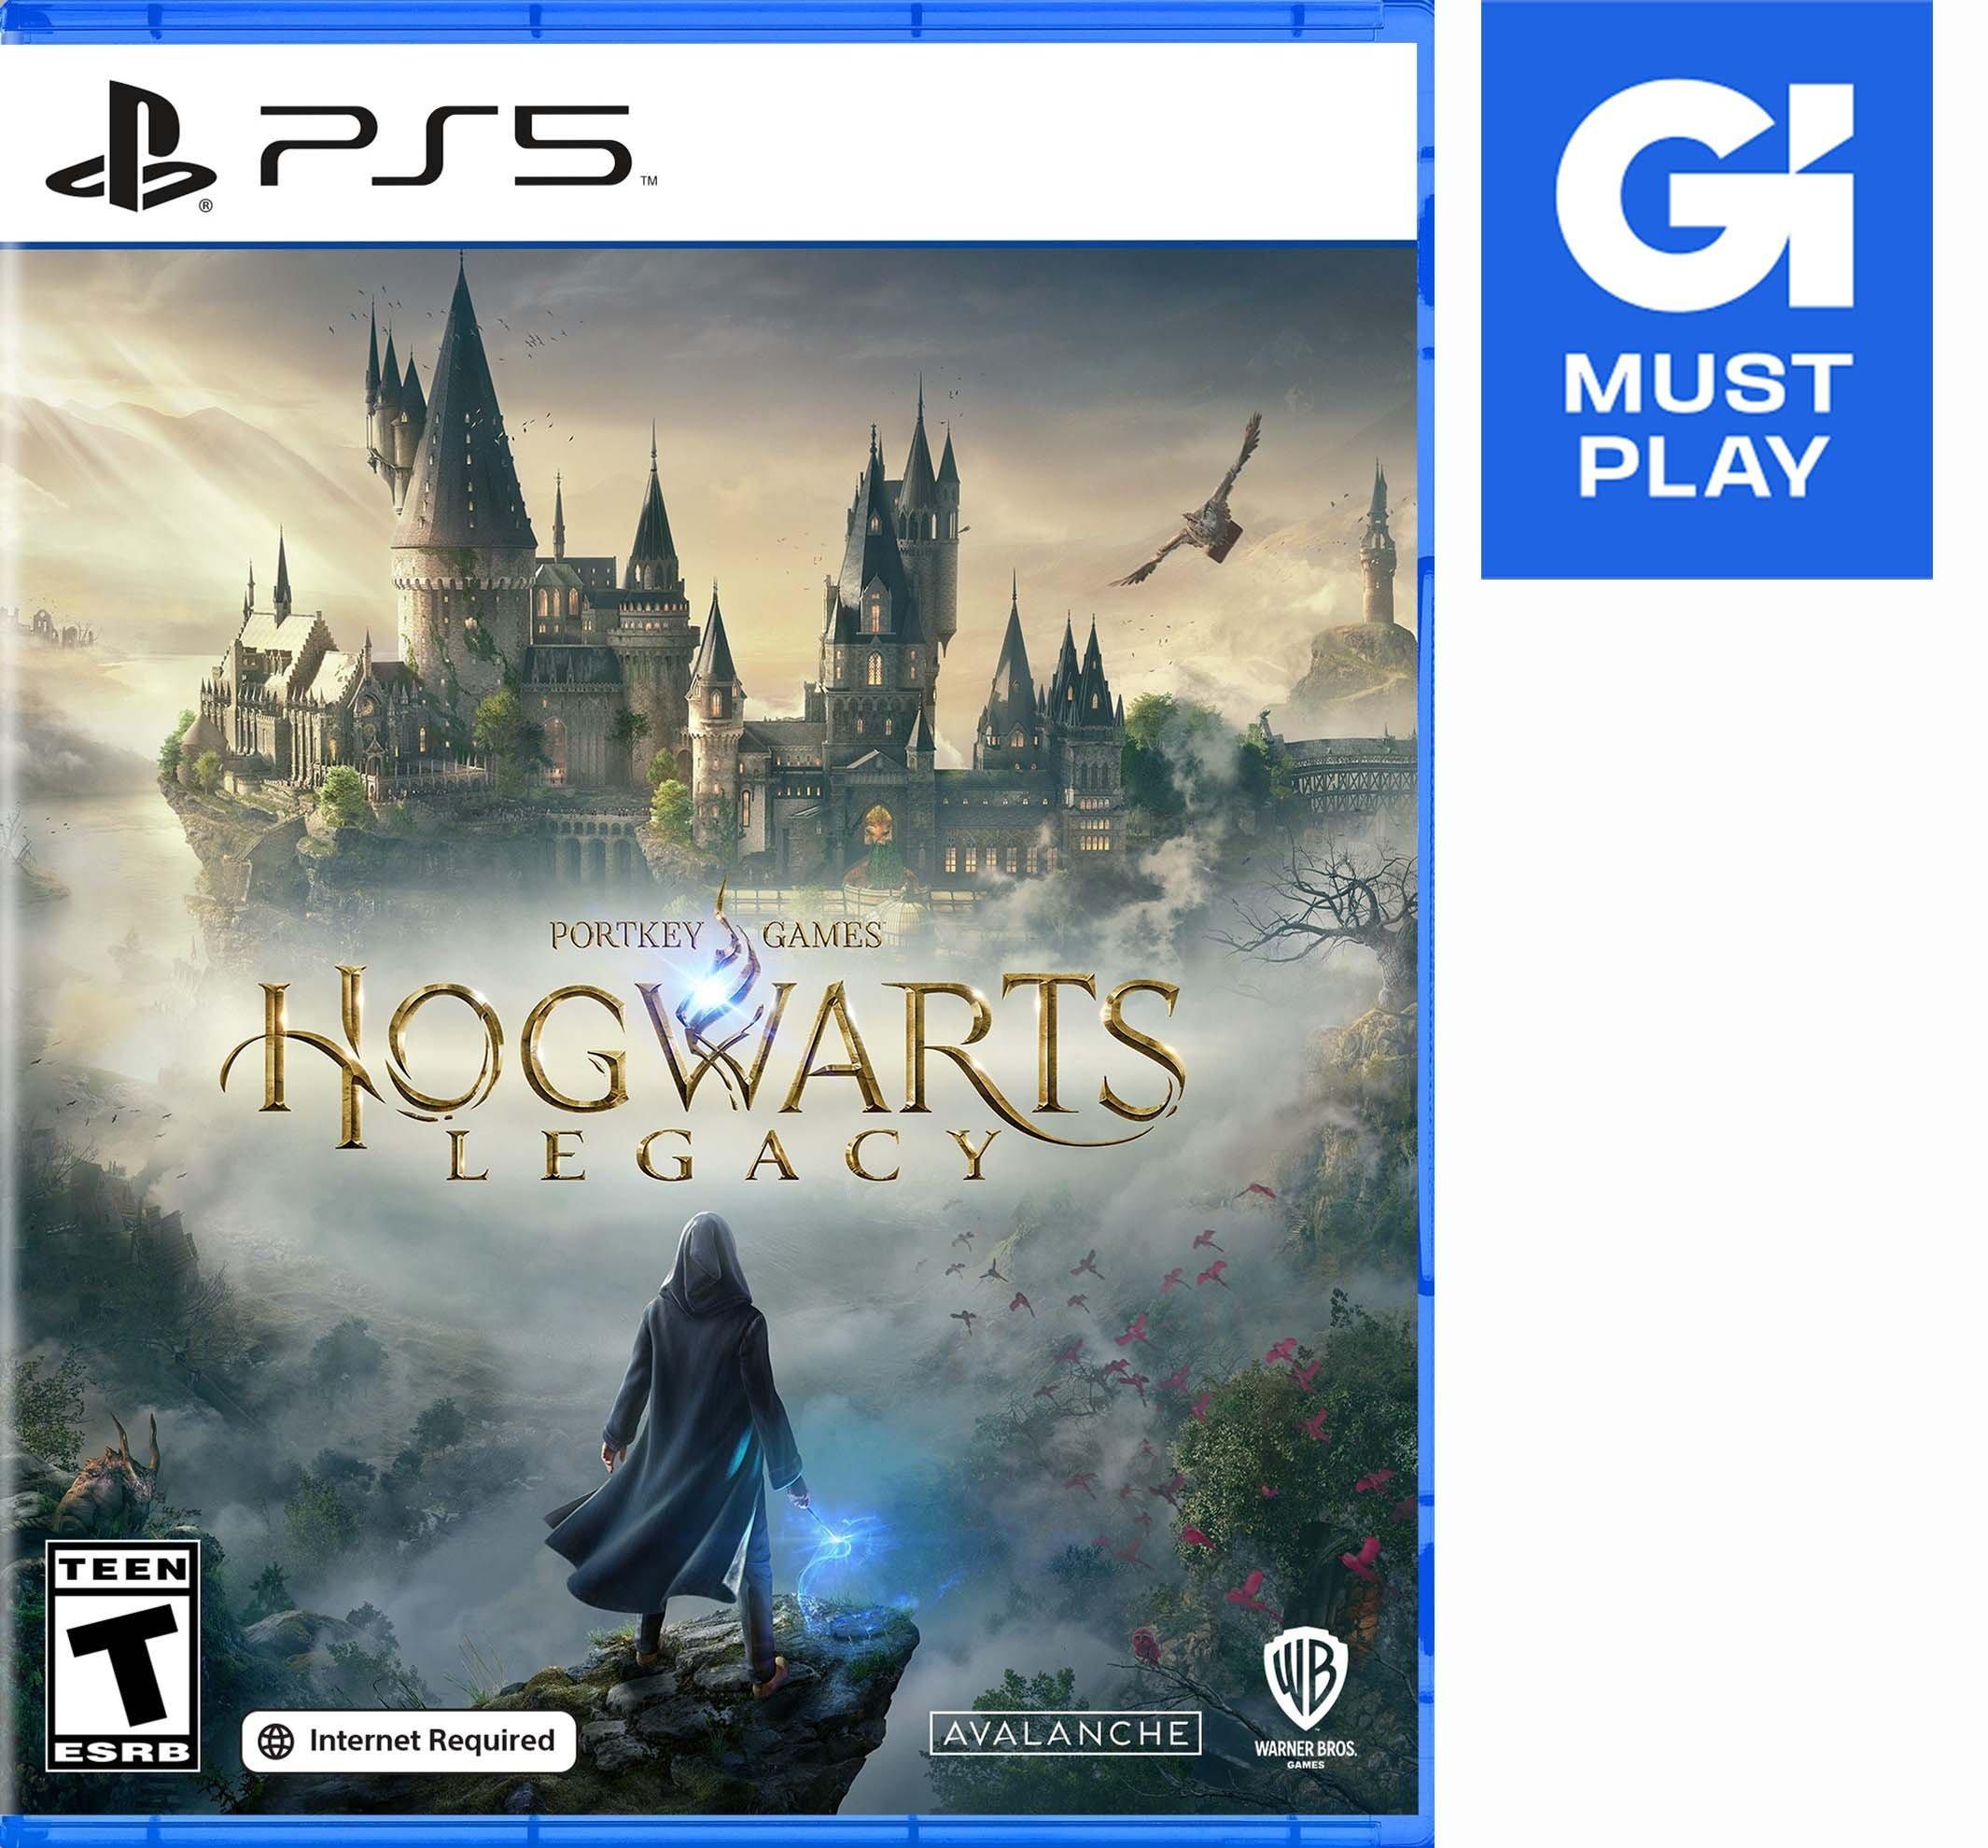 Hogwarts Legacy - PS5, PlayStation 5